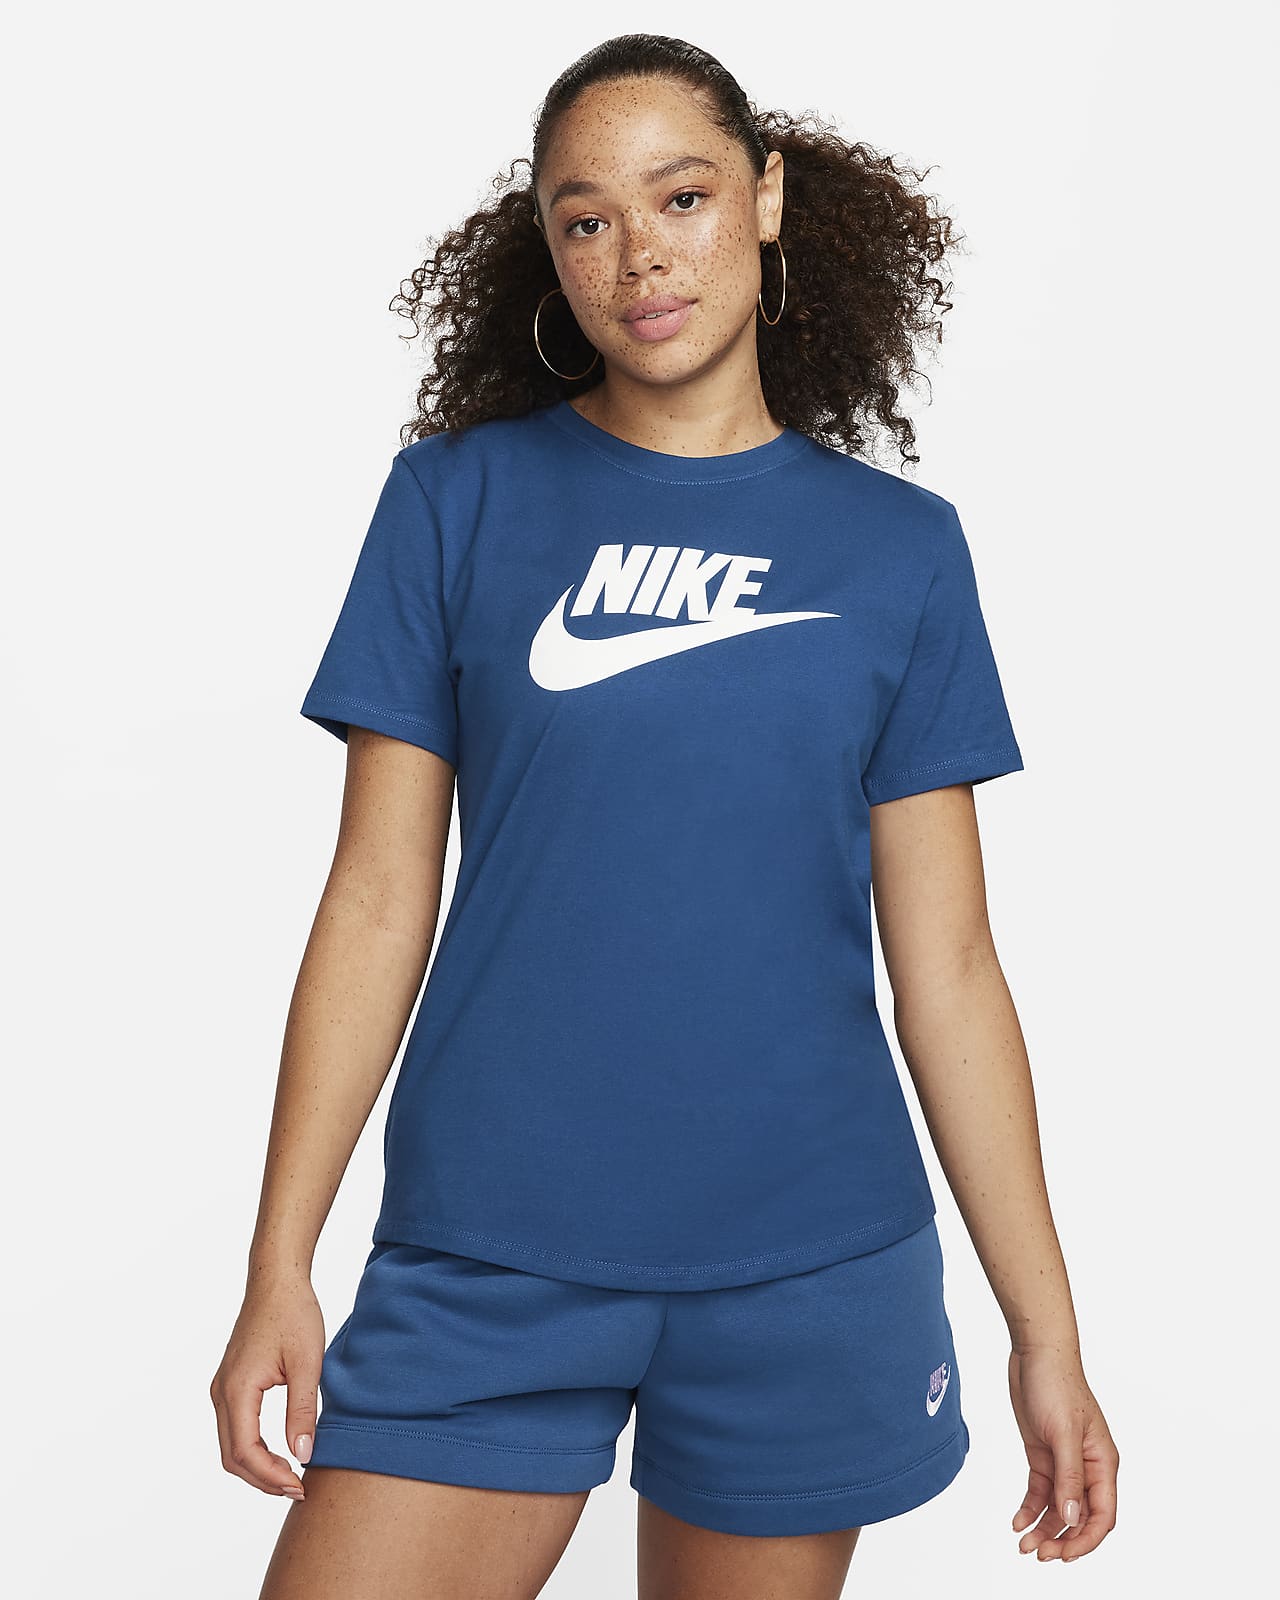 Women's Yoga Tops & T-Shirts. Nike VN